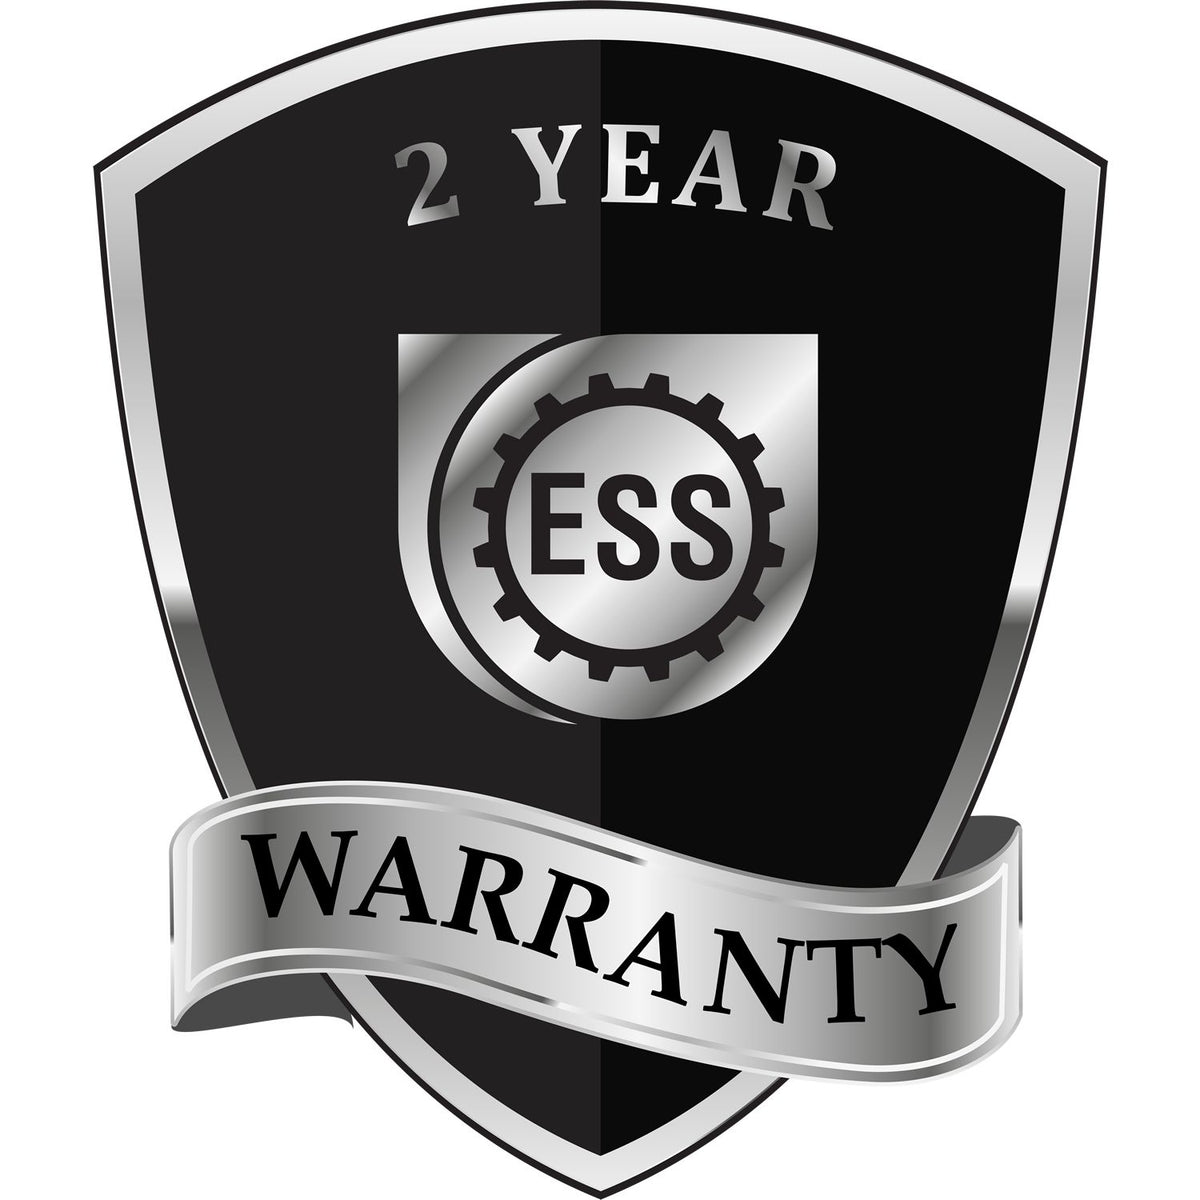 A black and silver badge or emblem showing warranty information for the Hybrid Kansas Landscape Architect Seal